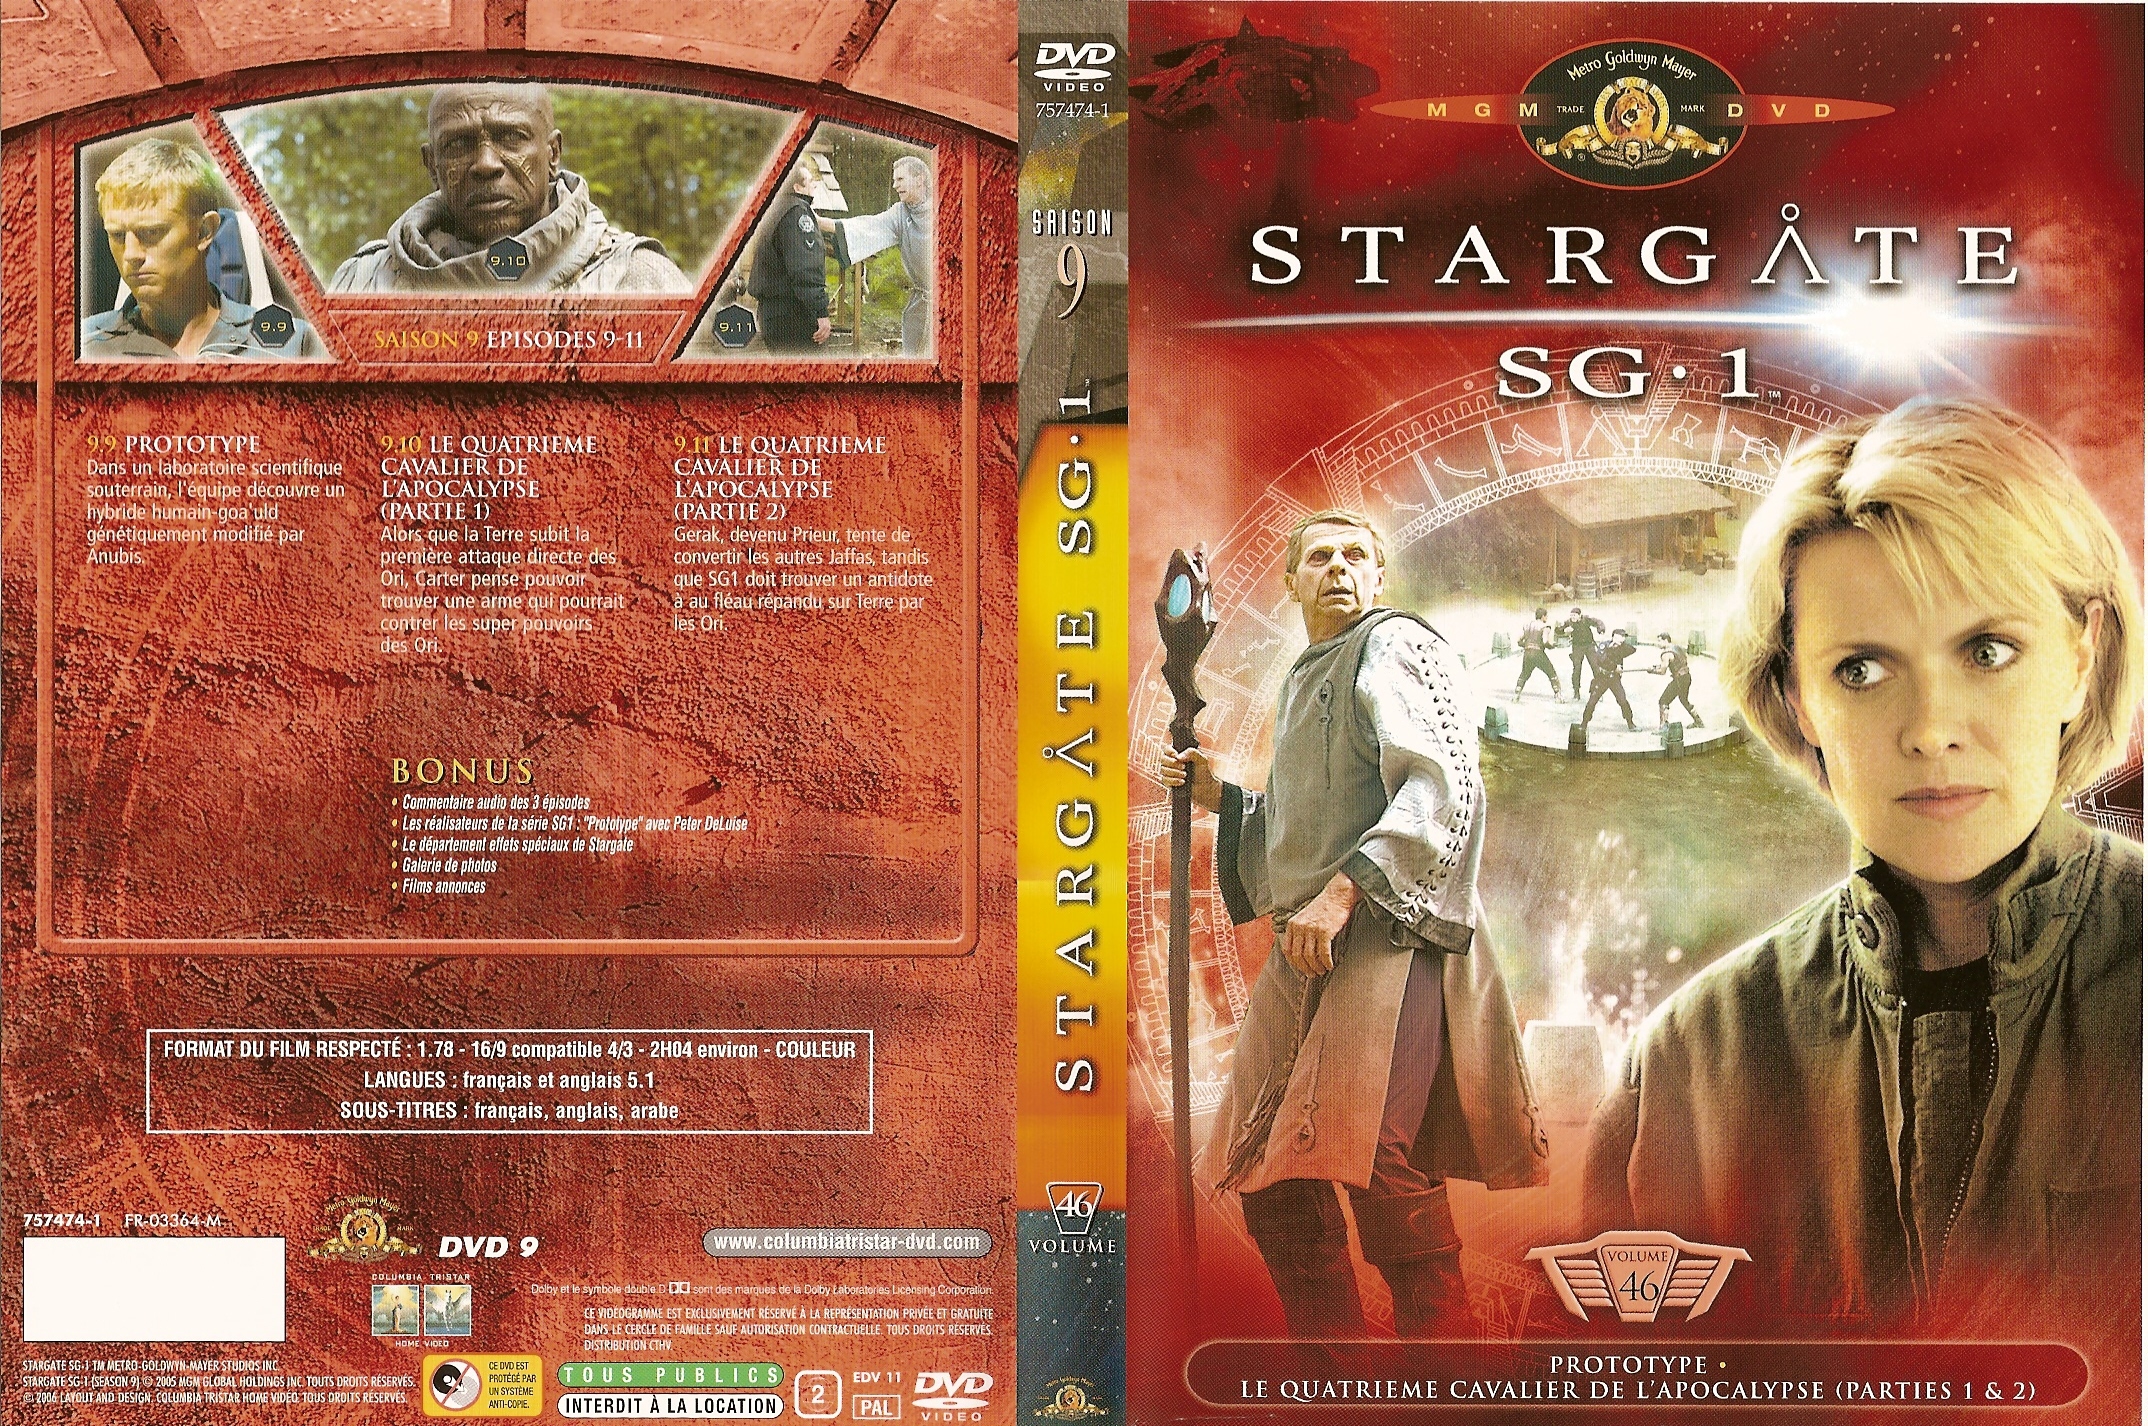 Jaquette DVD Stargate SG1 vol 46